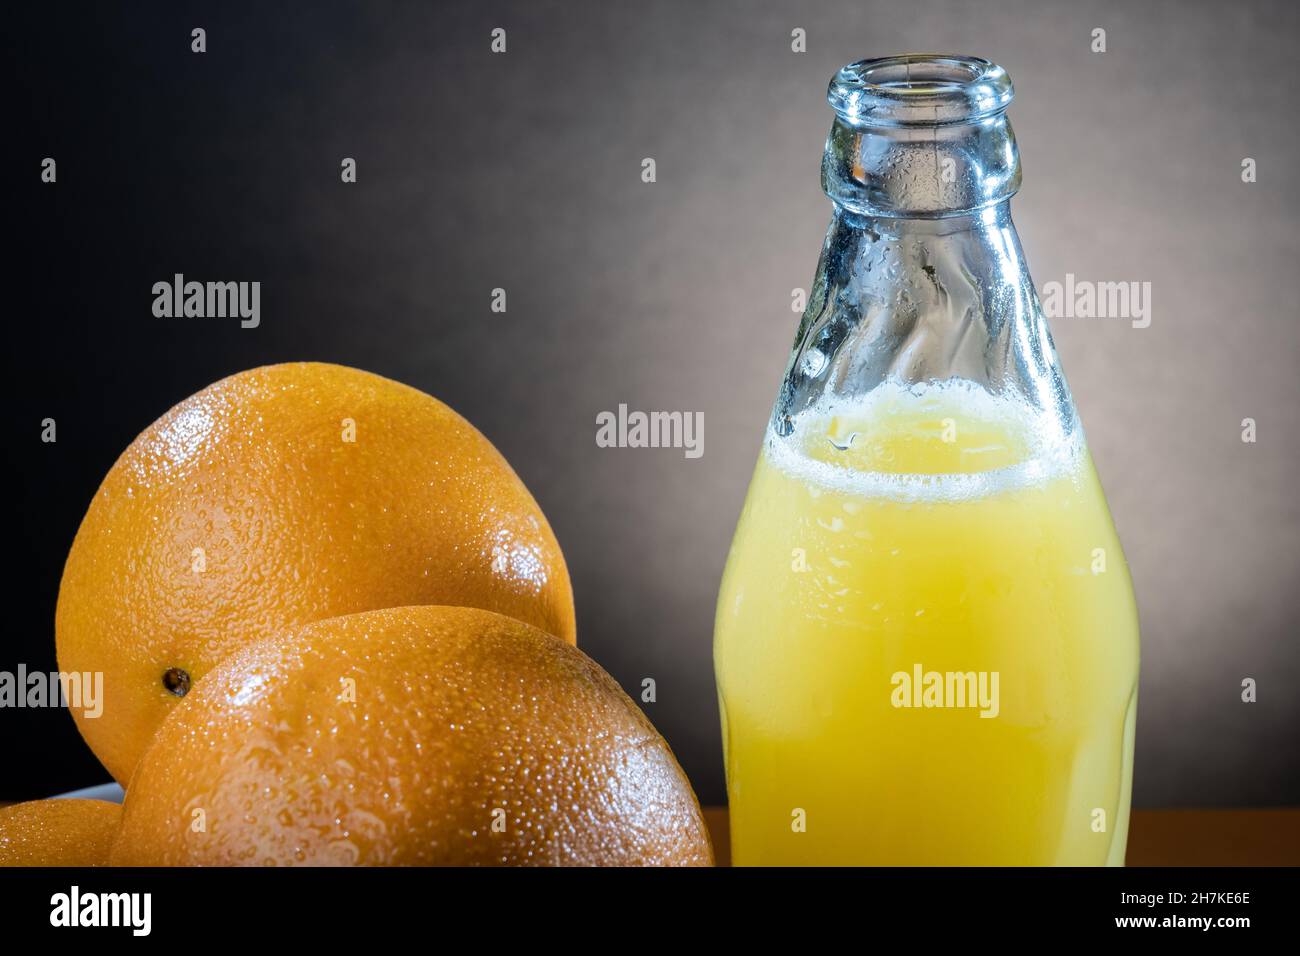 Helsinki / Finland - Closeup of moist oranges and glass bottle of orange  juice on the table Stock Photo - Alamy